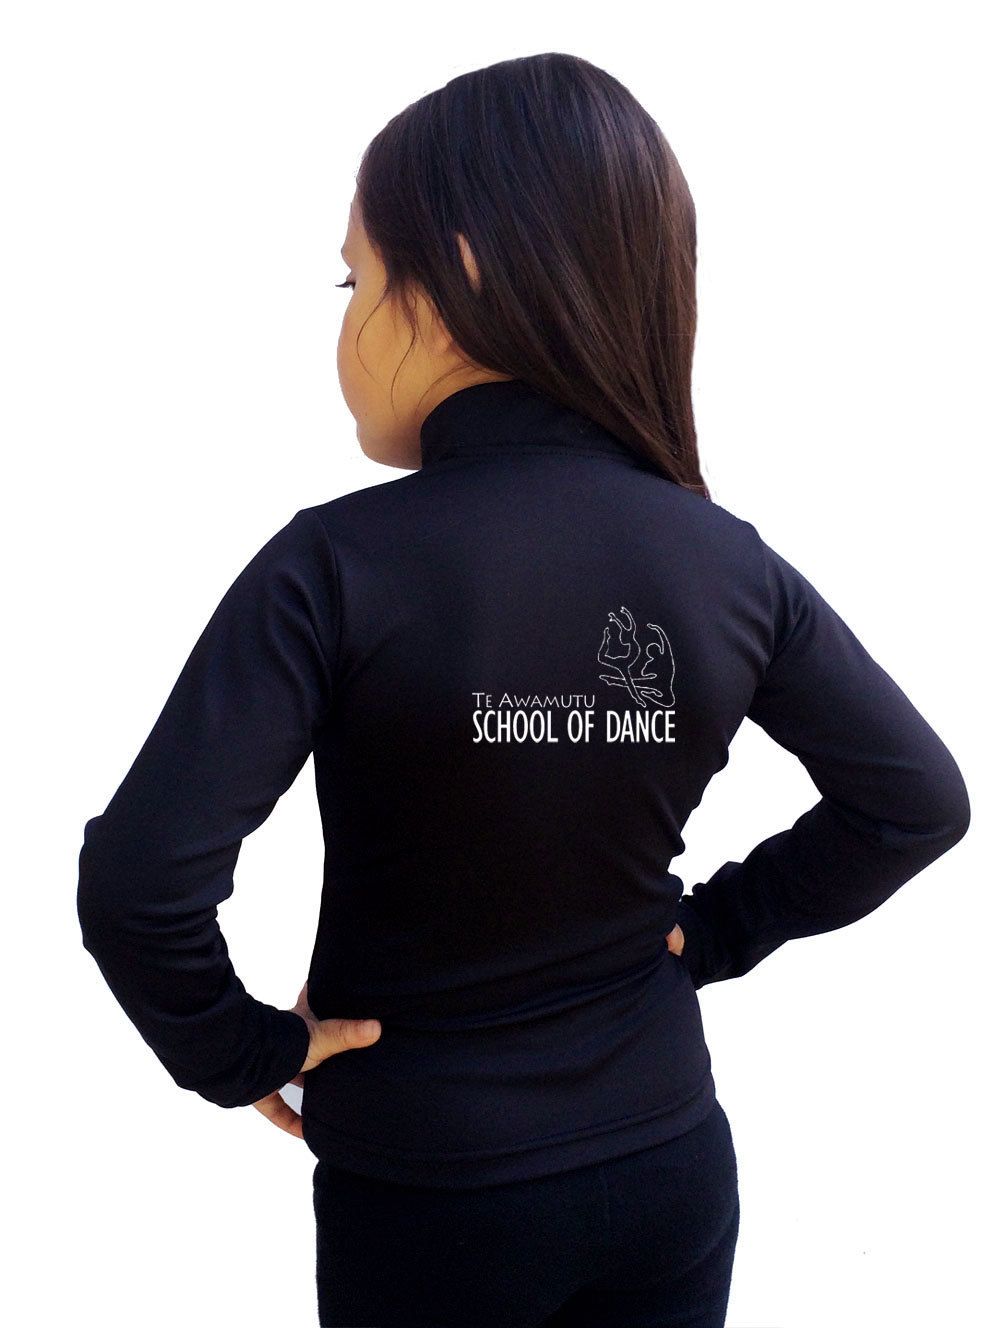 Plus Sizes Custom Sublimated Cheer Dance Team Warm Ups Jackets Buy Dance  Team Jacket,Cheer Warm Ups,Custom Sublimated Jackets Product On |  forum.iktva.sa